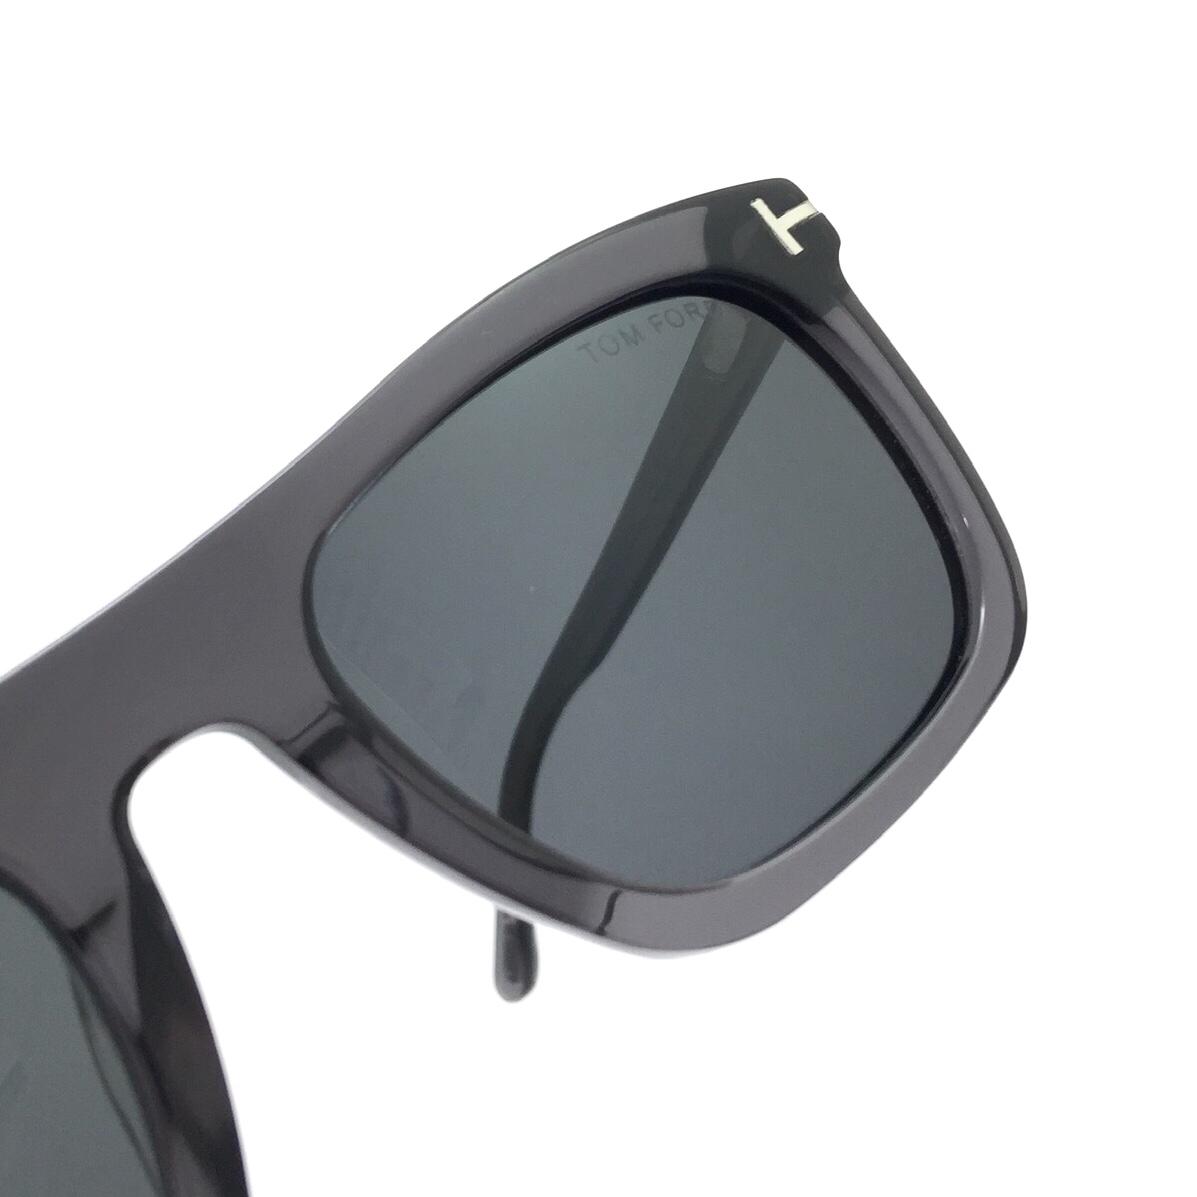 توم فورد-rectangle sunglasses FT5757